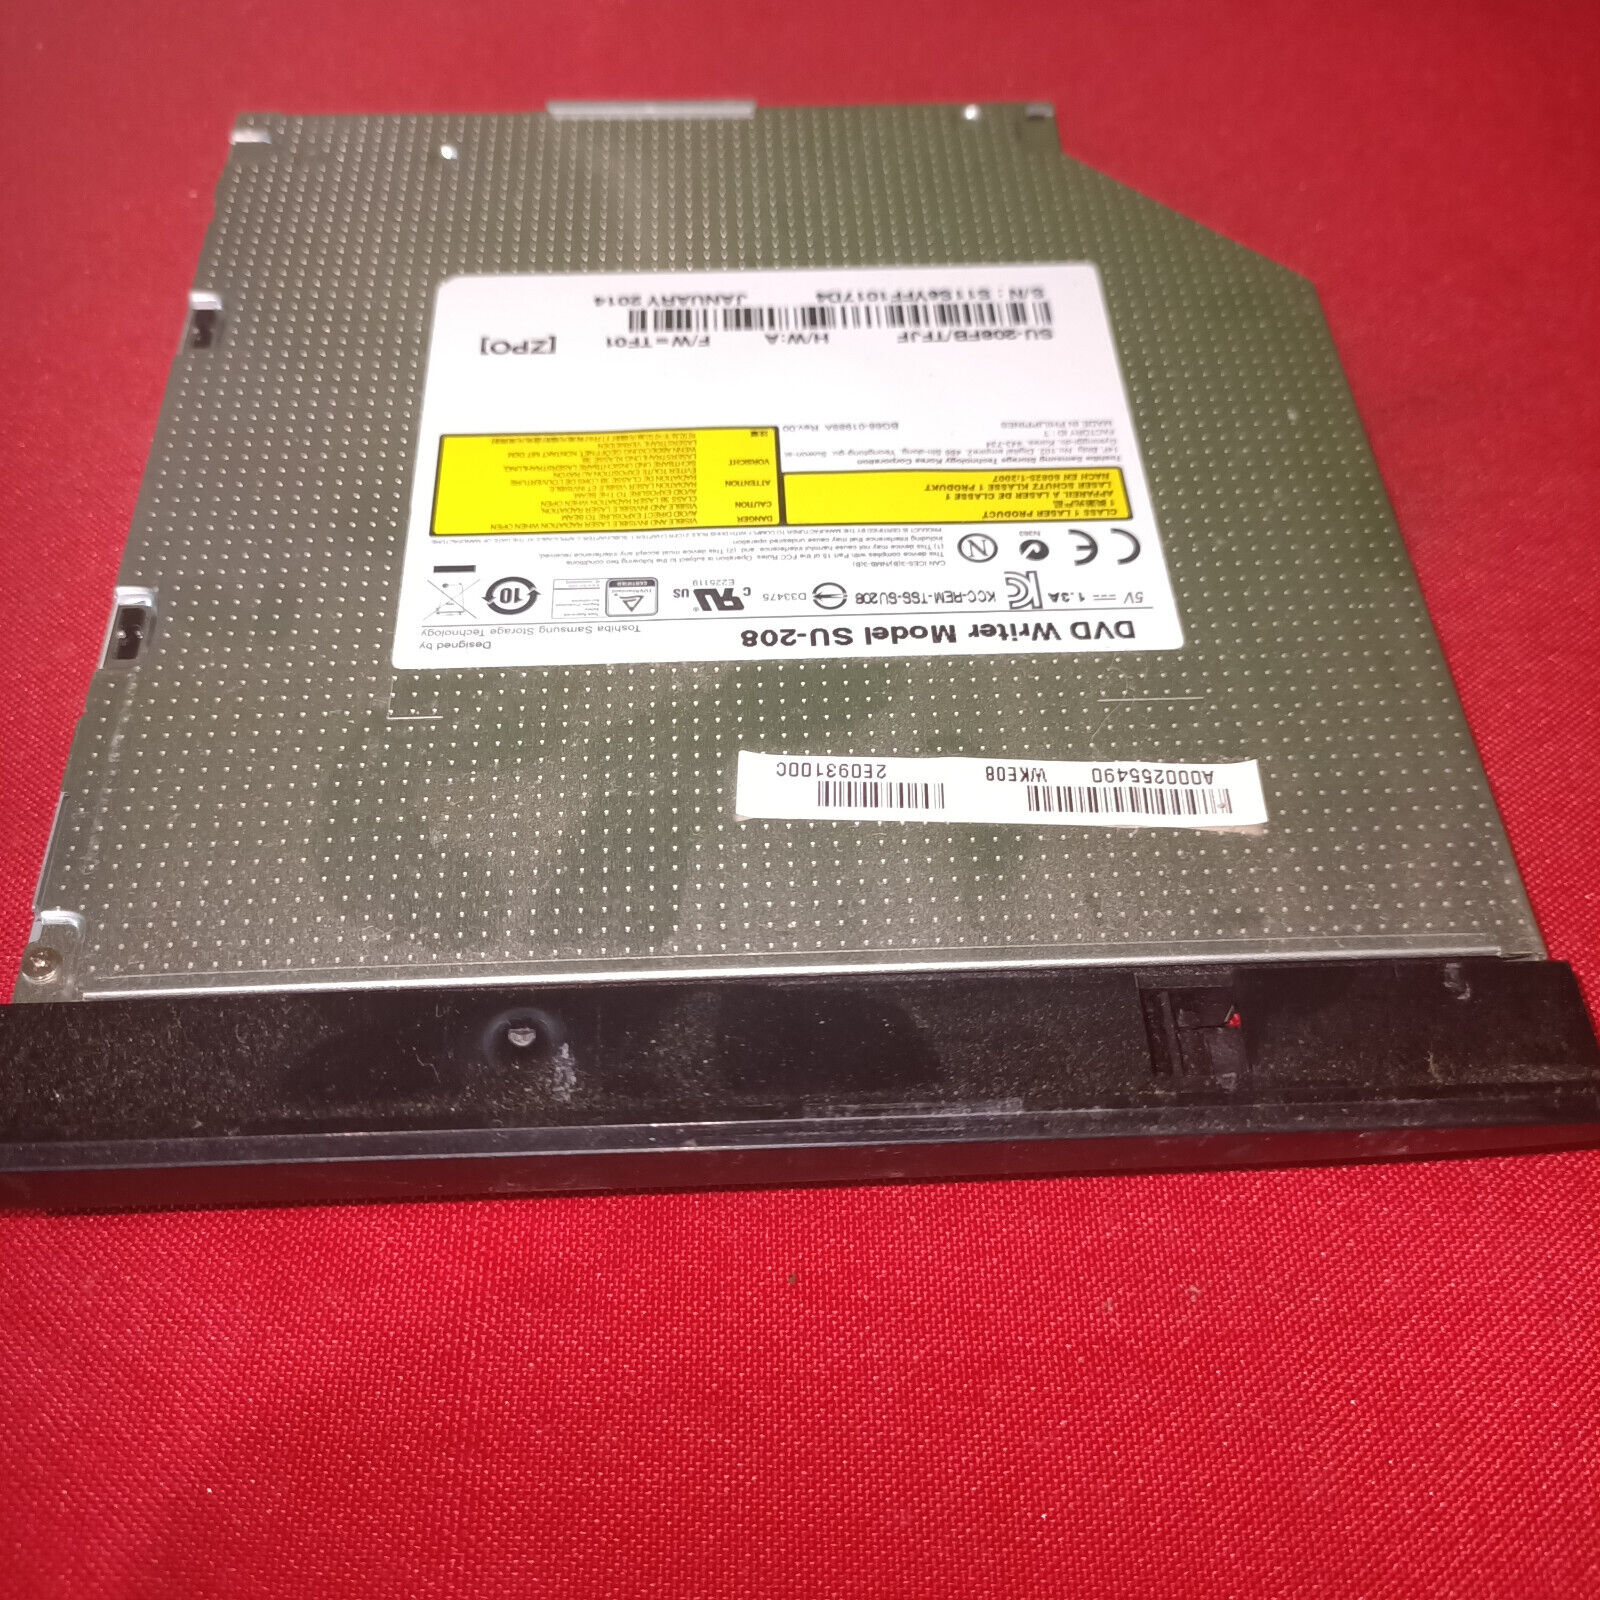 Toshiba Satellite C70D-A CD DVD Player SATA SU-208 Occasion Toshiba C70D-A-107